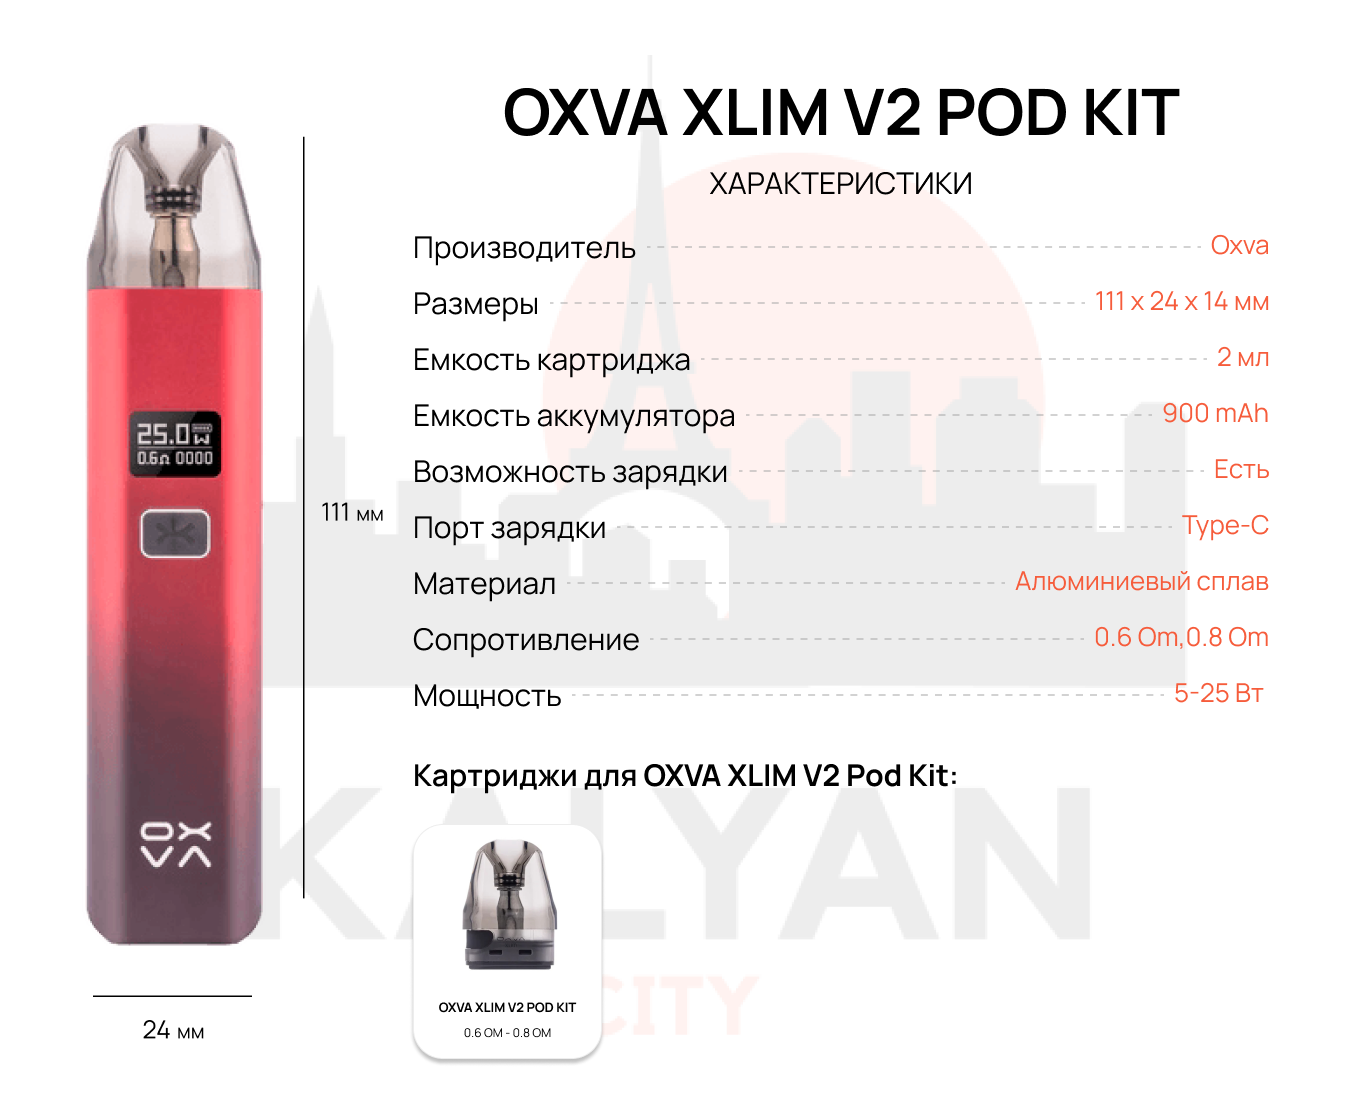 OXVA XLIM V2 Pod Kit Характеристика